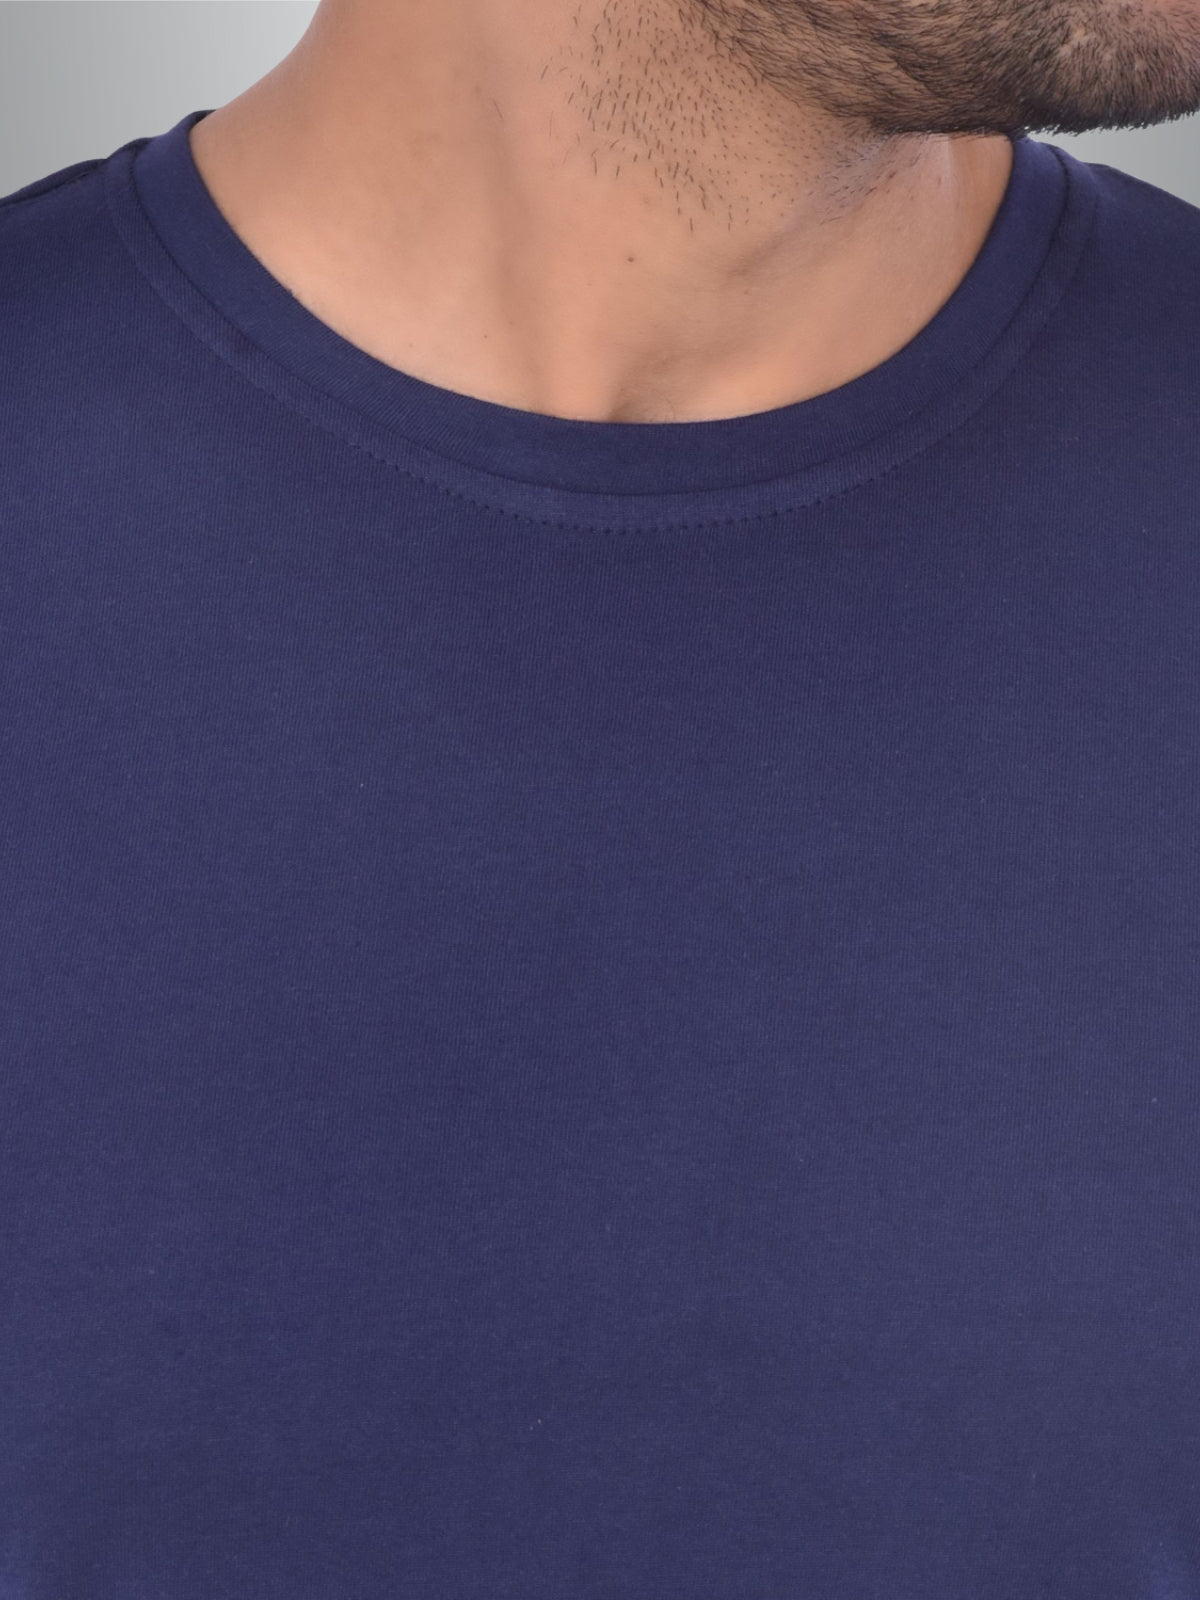 Mens Solid Round Neck  Half Sleeve Cotton Blend Navy Blue T-shirt